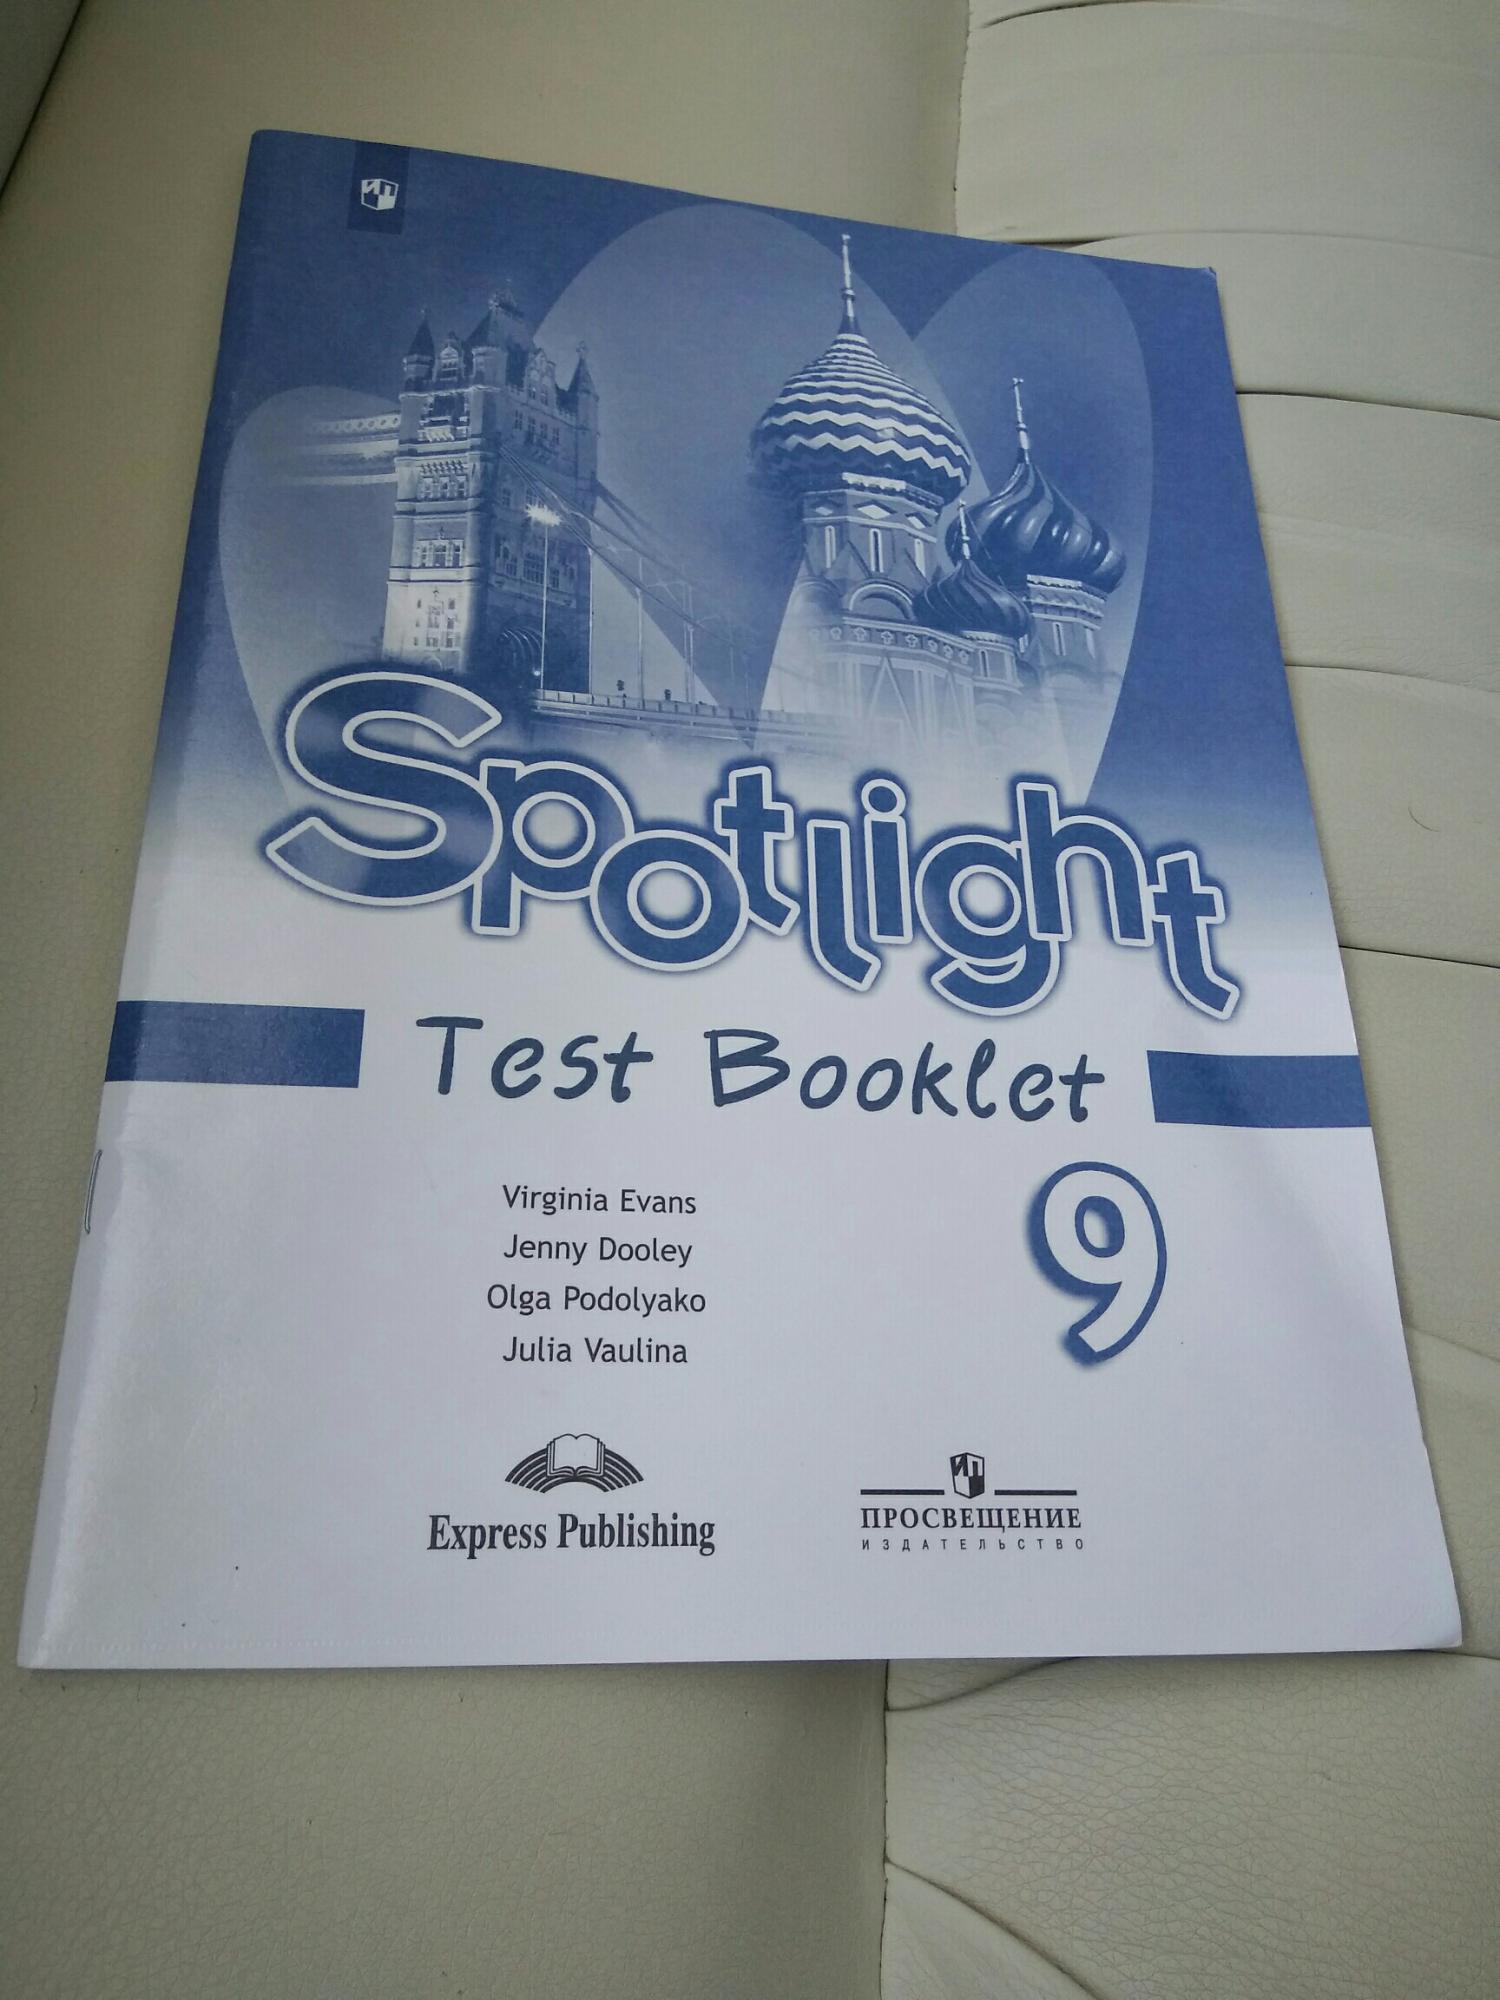 Spotlight 8 test booklet английский